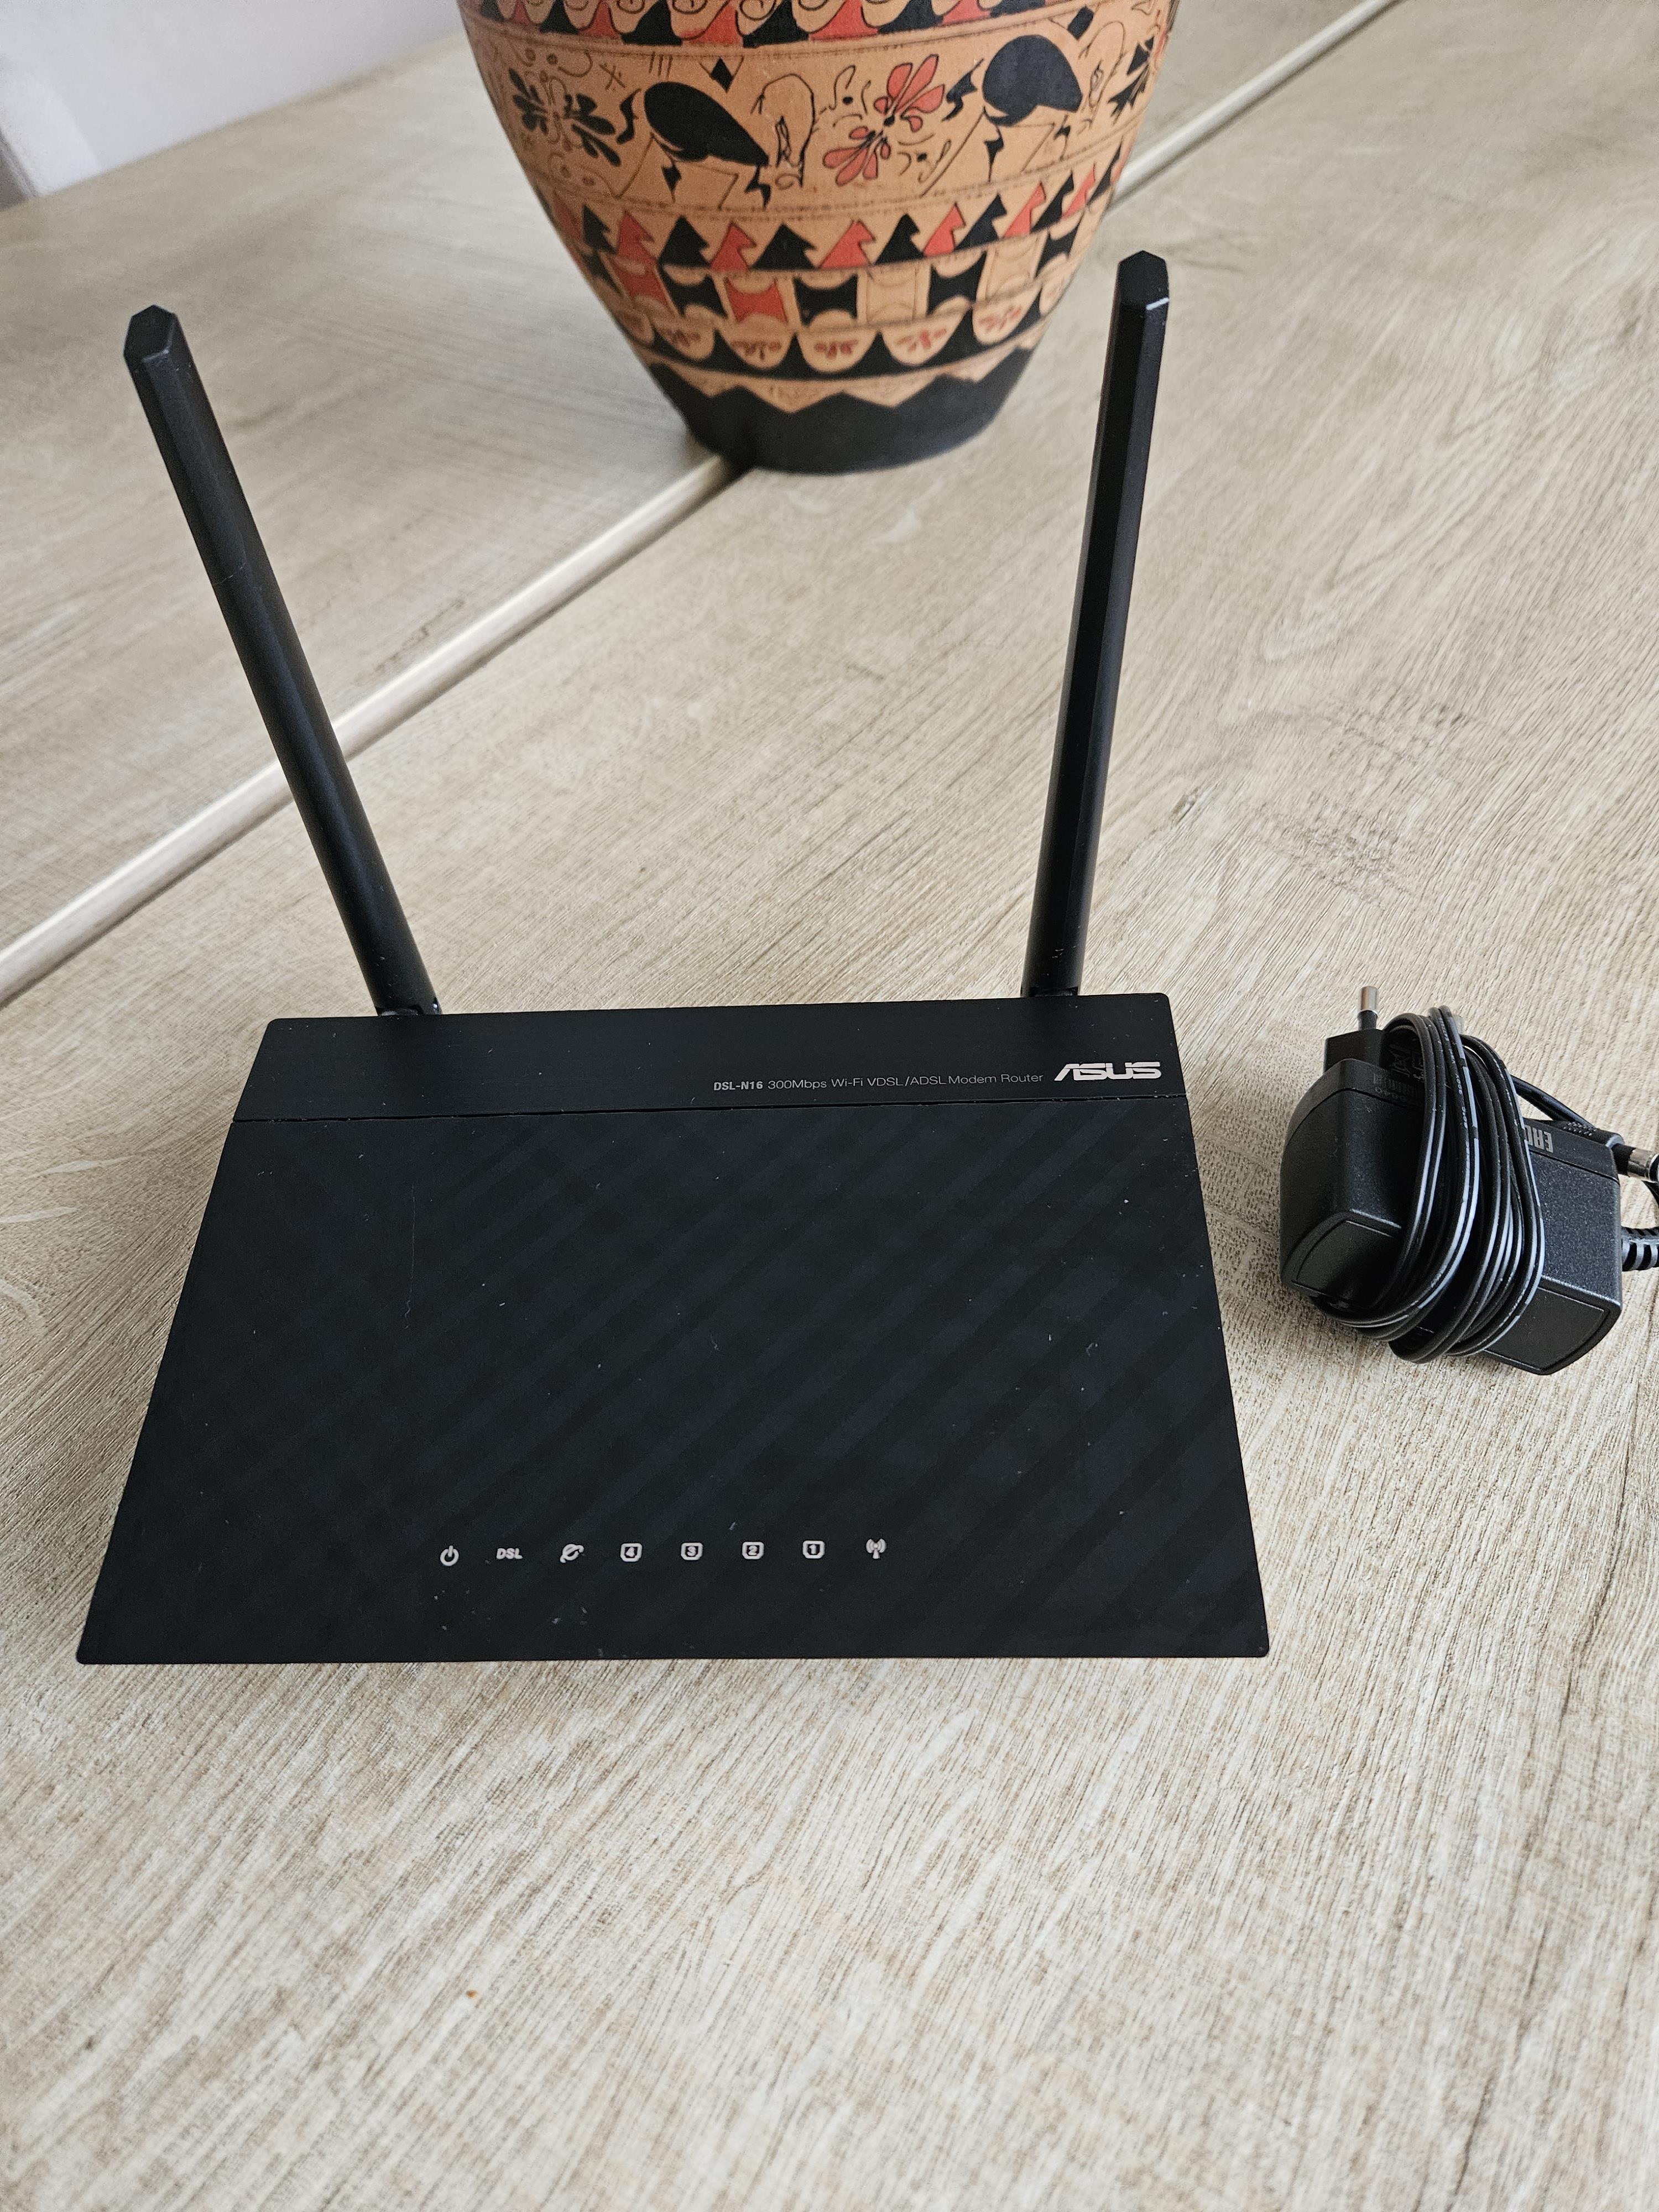 Asus DSL-N16-VPN-ADSL-VDSL-FiBER-Modem Router | DonanımHaber Forum